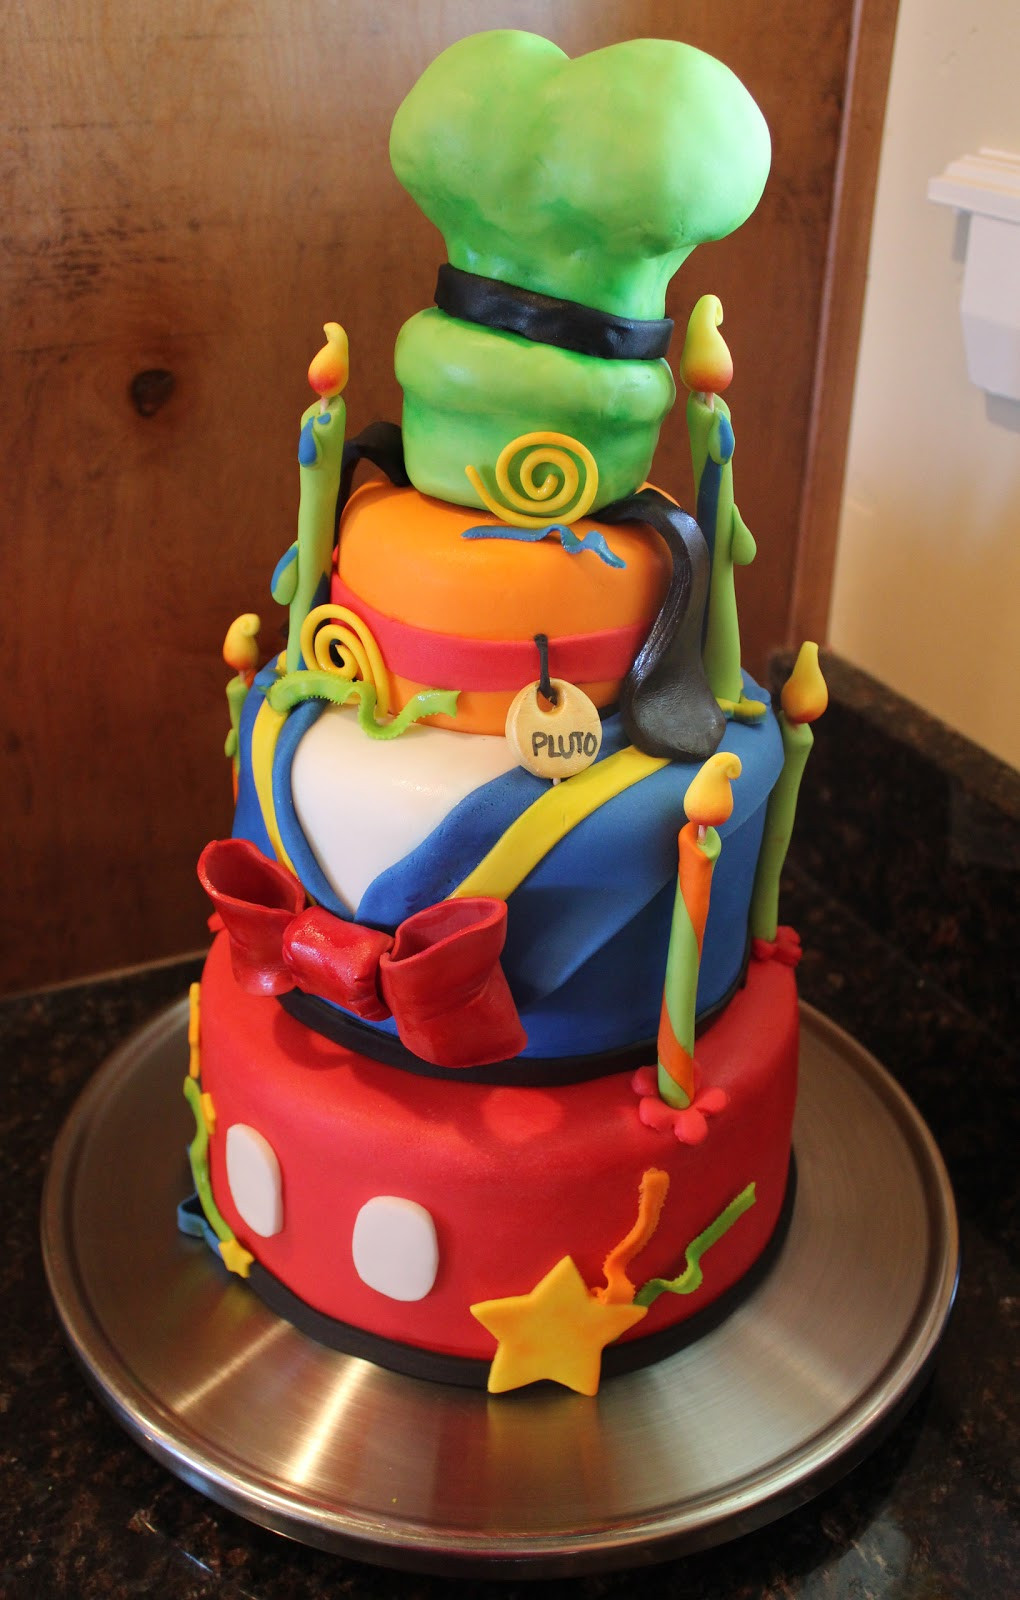 Best ideas about Disney Birthday Cake
. Save or Pin Kelli s Kakez Disney Birthday Cake Now.